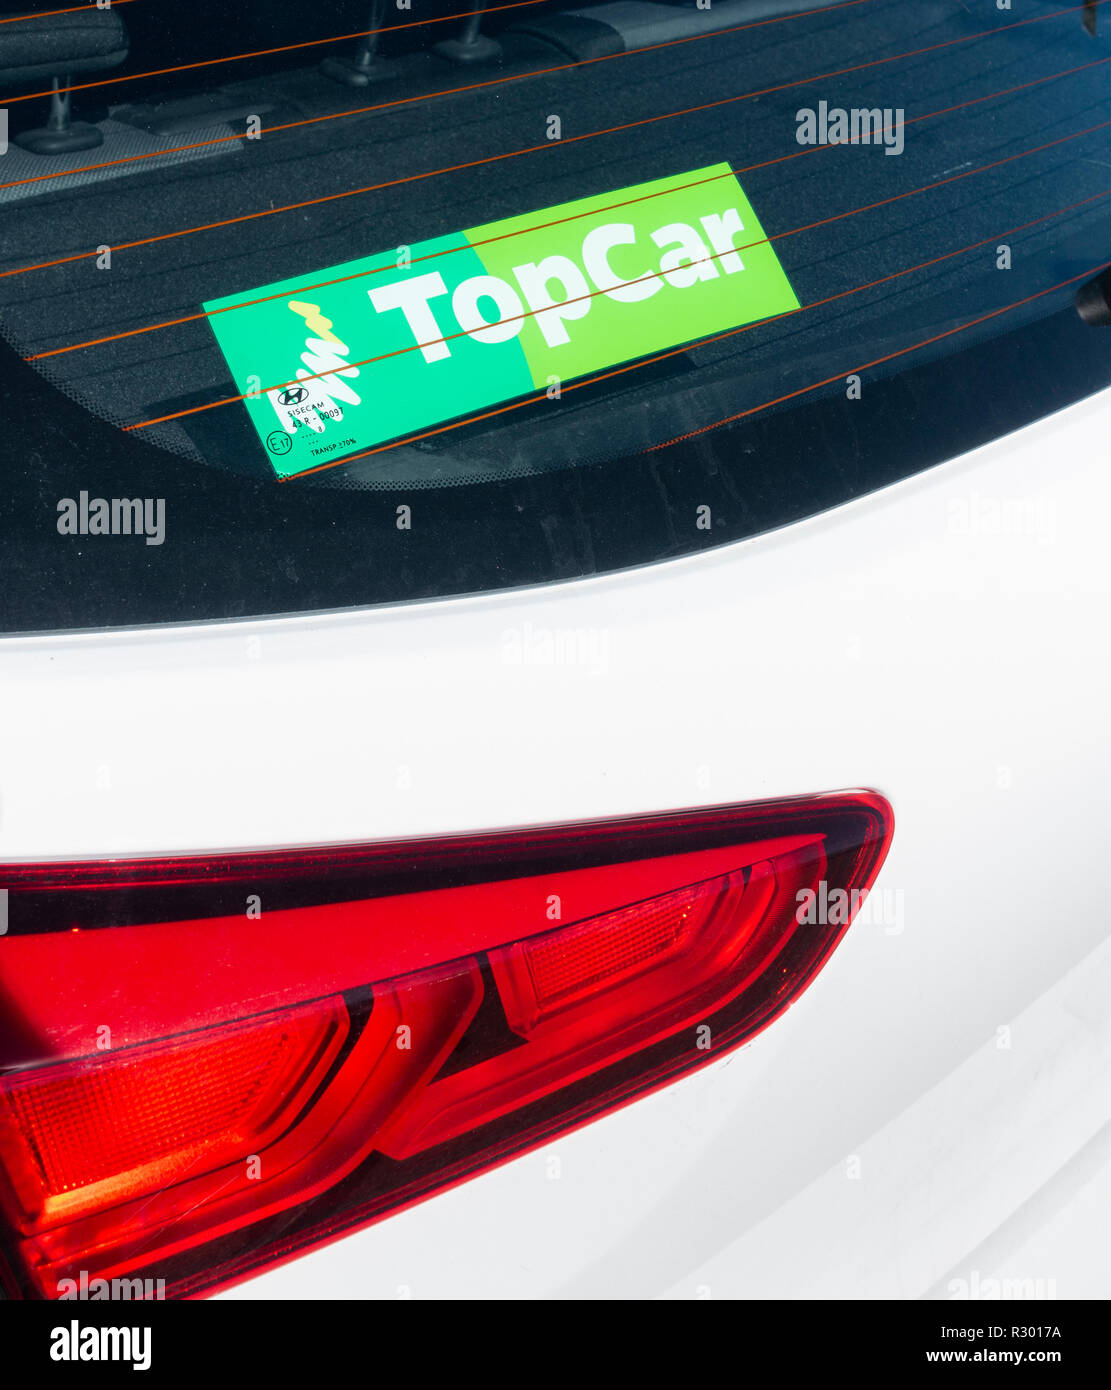 Top car/Topcar hire car in Spain Stock Photo - Alamy